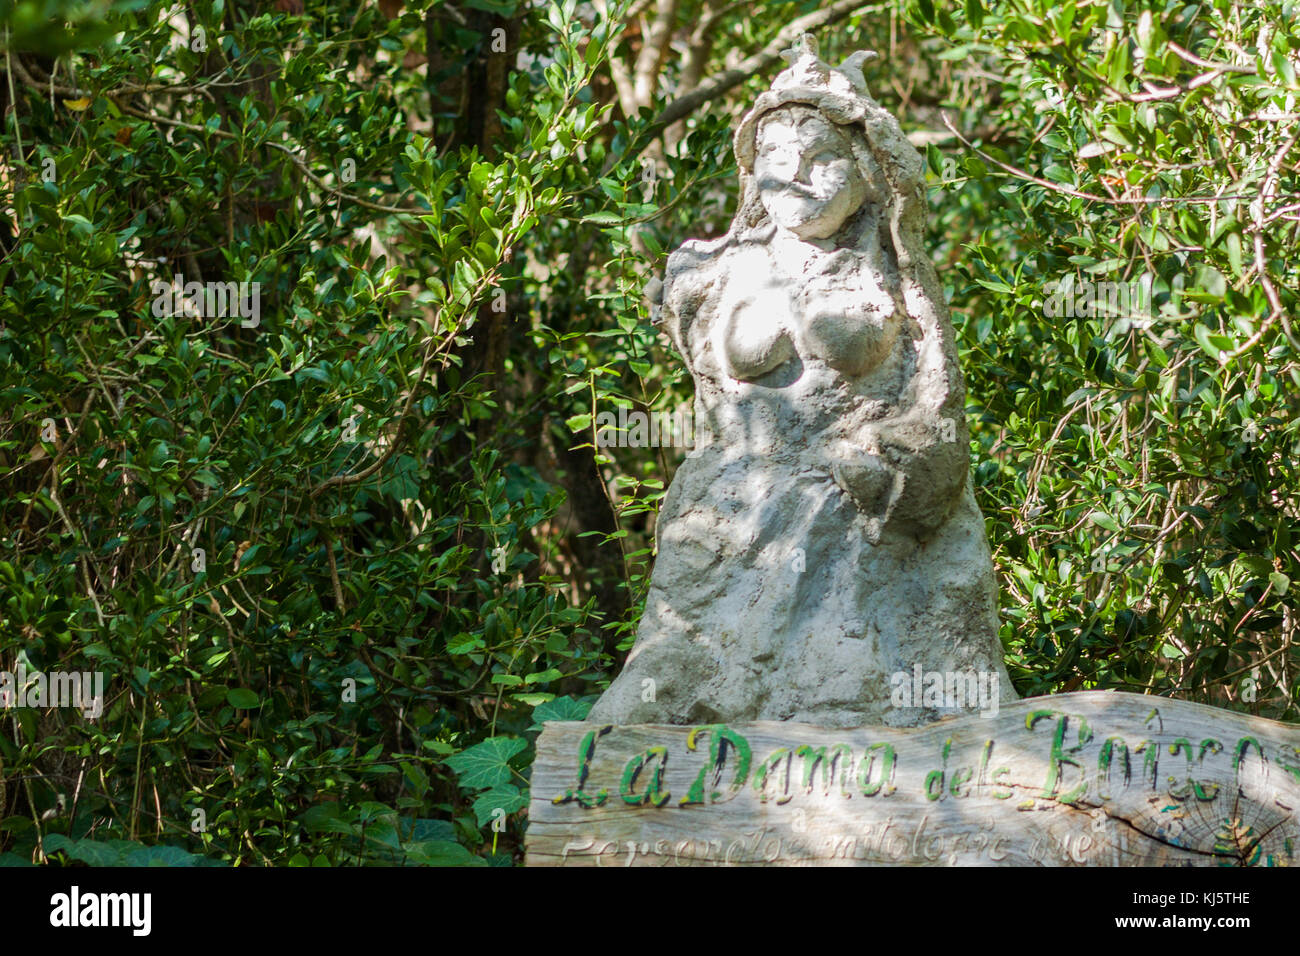 Statue of La Dama dels Boixos (The Lady of Boxwood) in LLuc botanical garden Stock Photo